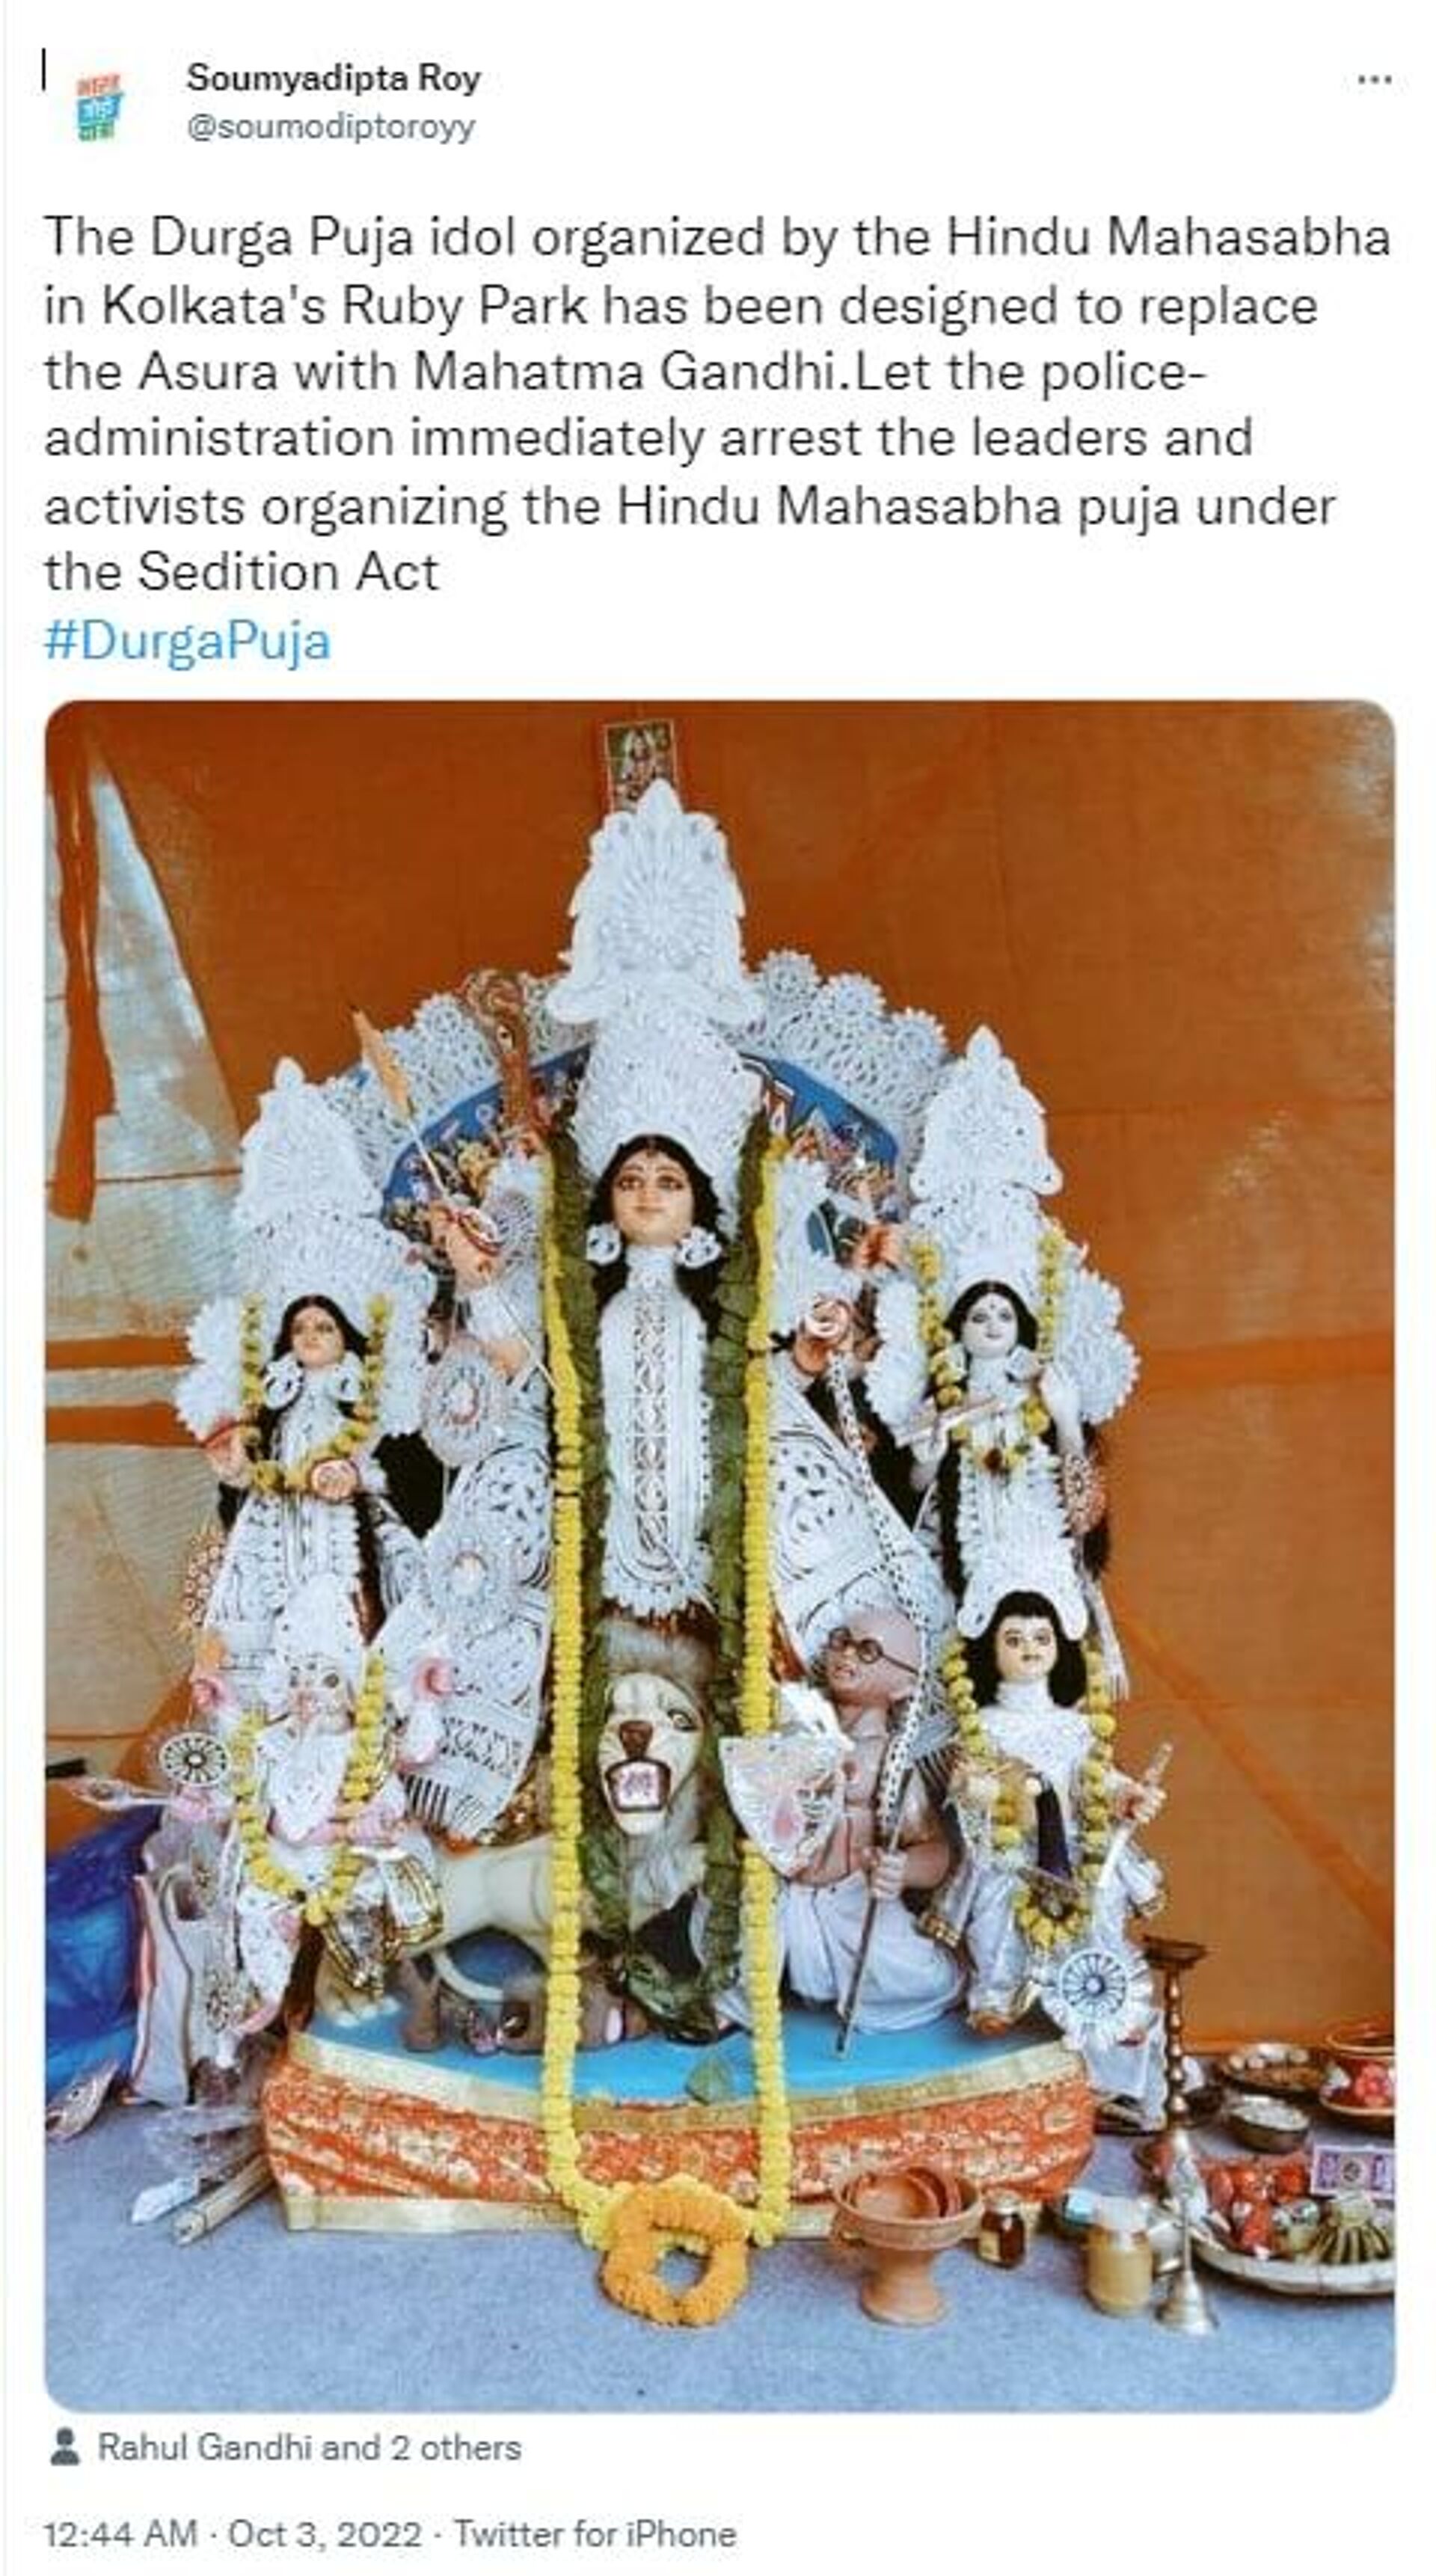 The Durga Puja idol organized by the Hindu Mahasabha in Kolkata's Ruby Park designed to replace the Asura with Mahatma Gandhi - Sputnik International, 1920, 03.10.2022